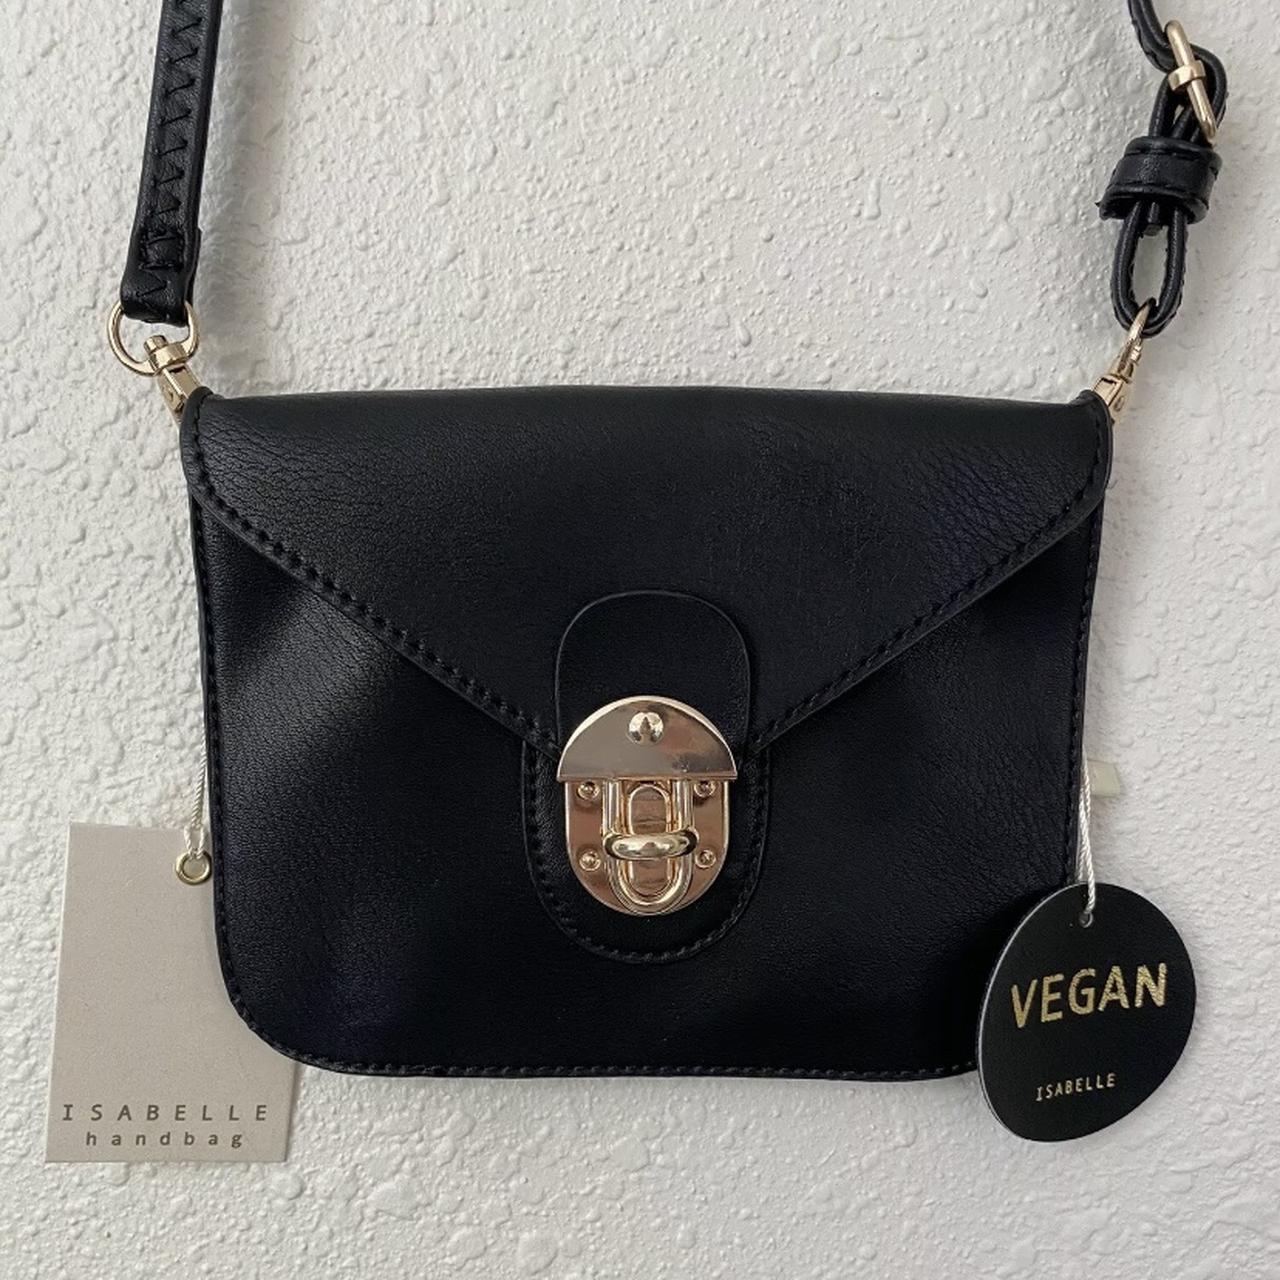 ISABELLE VEGAN HANDBAG  Vegan handbags, Handbag, Vegan bags